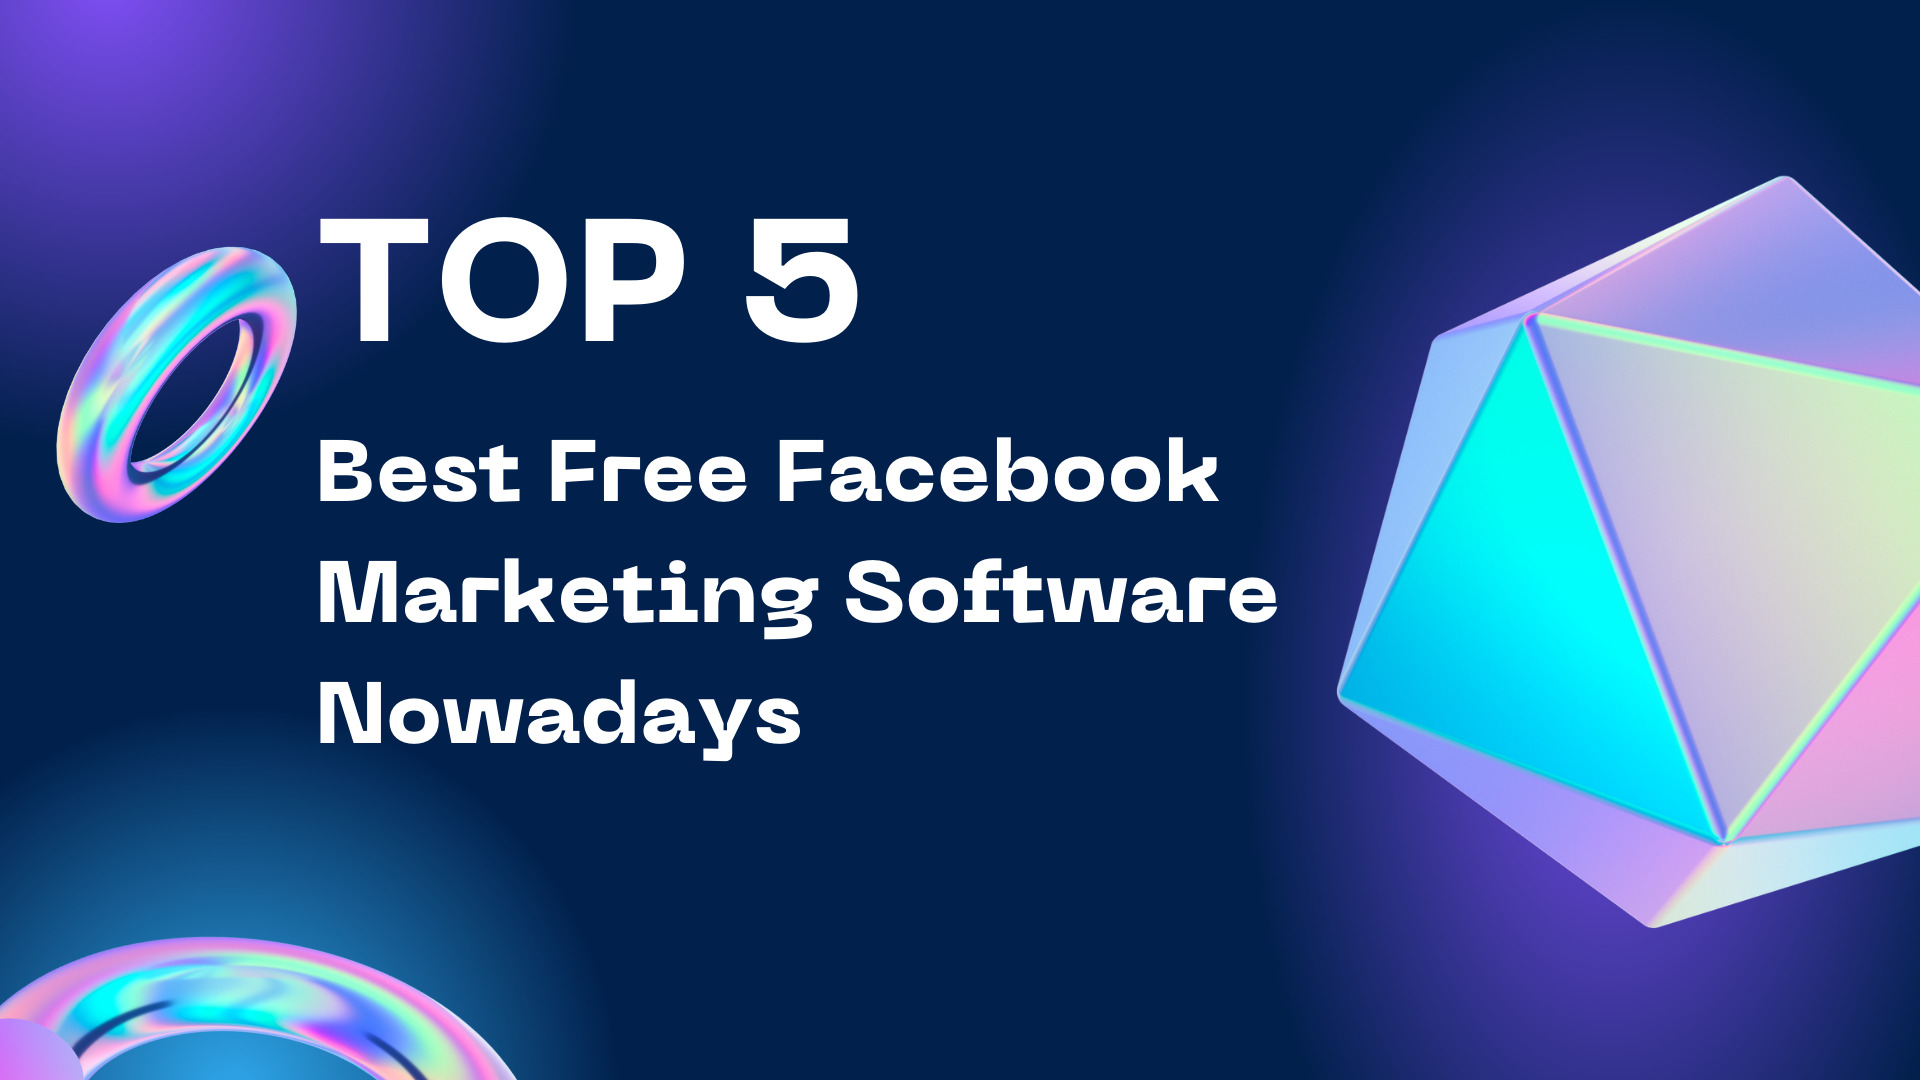 Top 5 Best Free Facebook Marketing Software Nowadays